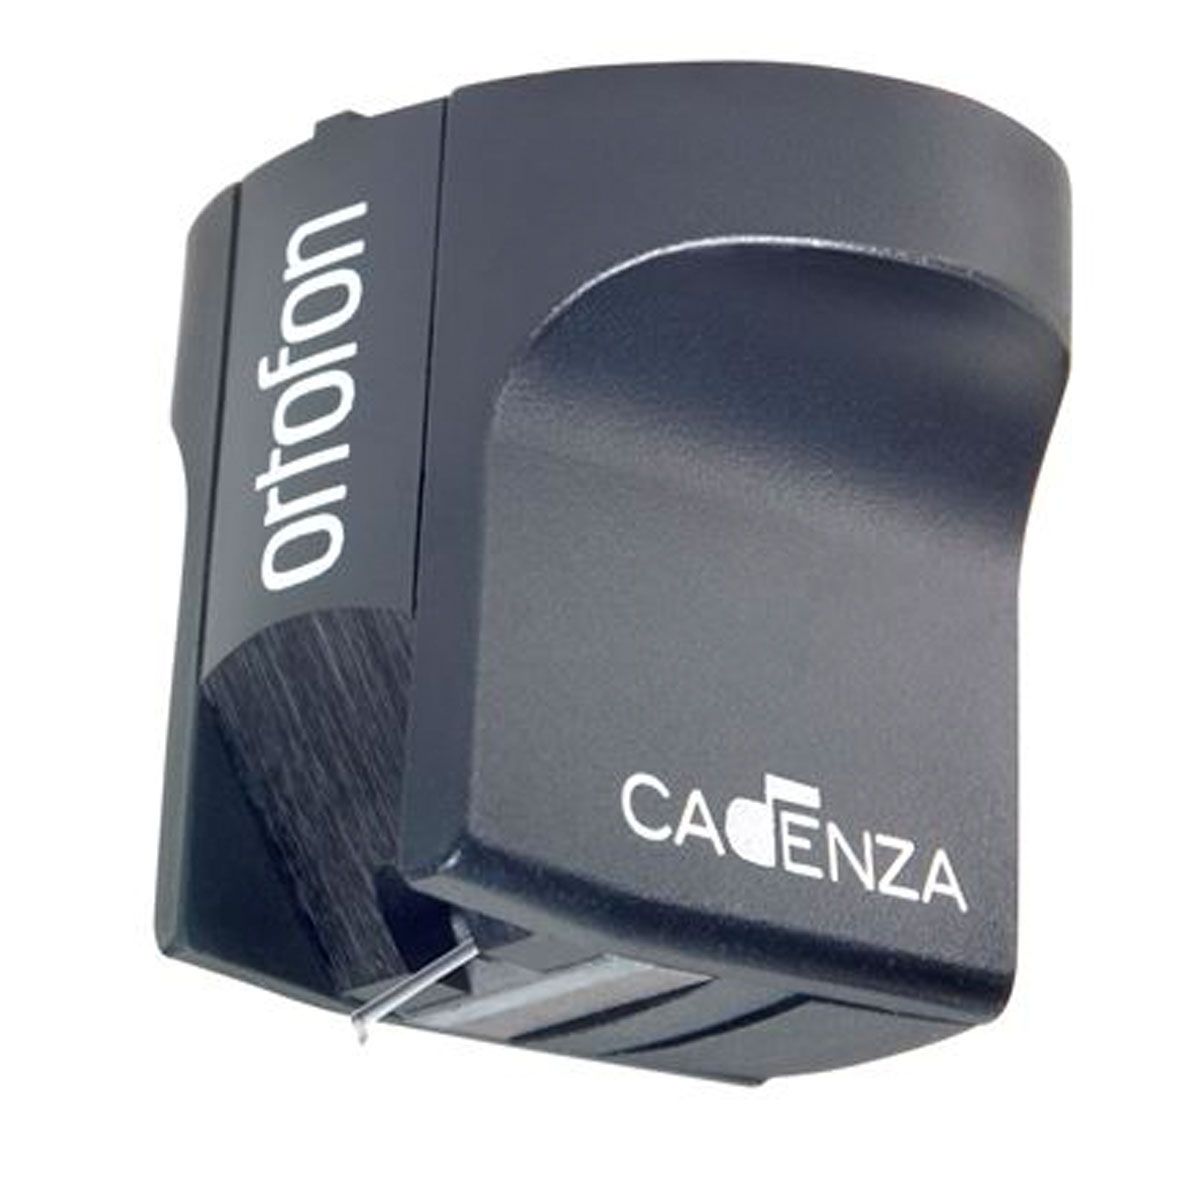 Ortofon MC Cadenza Black Turntable Cartridge